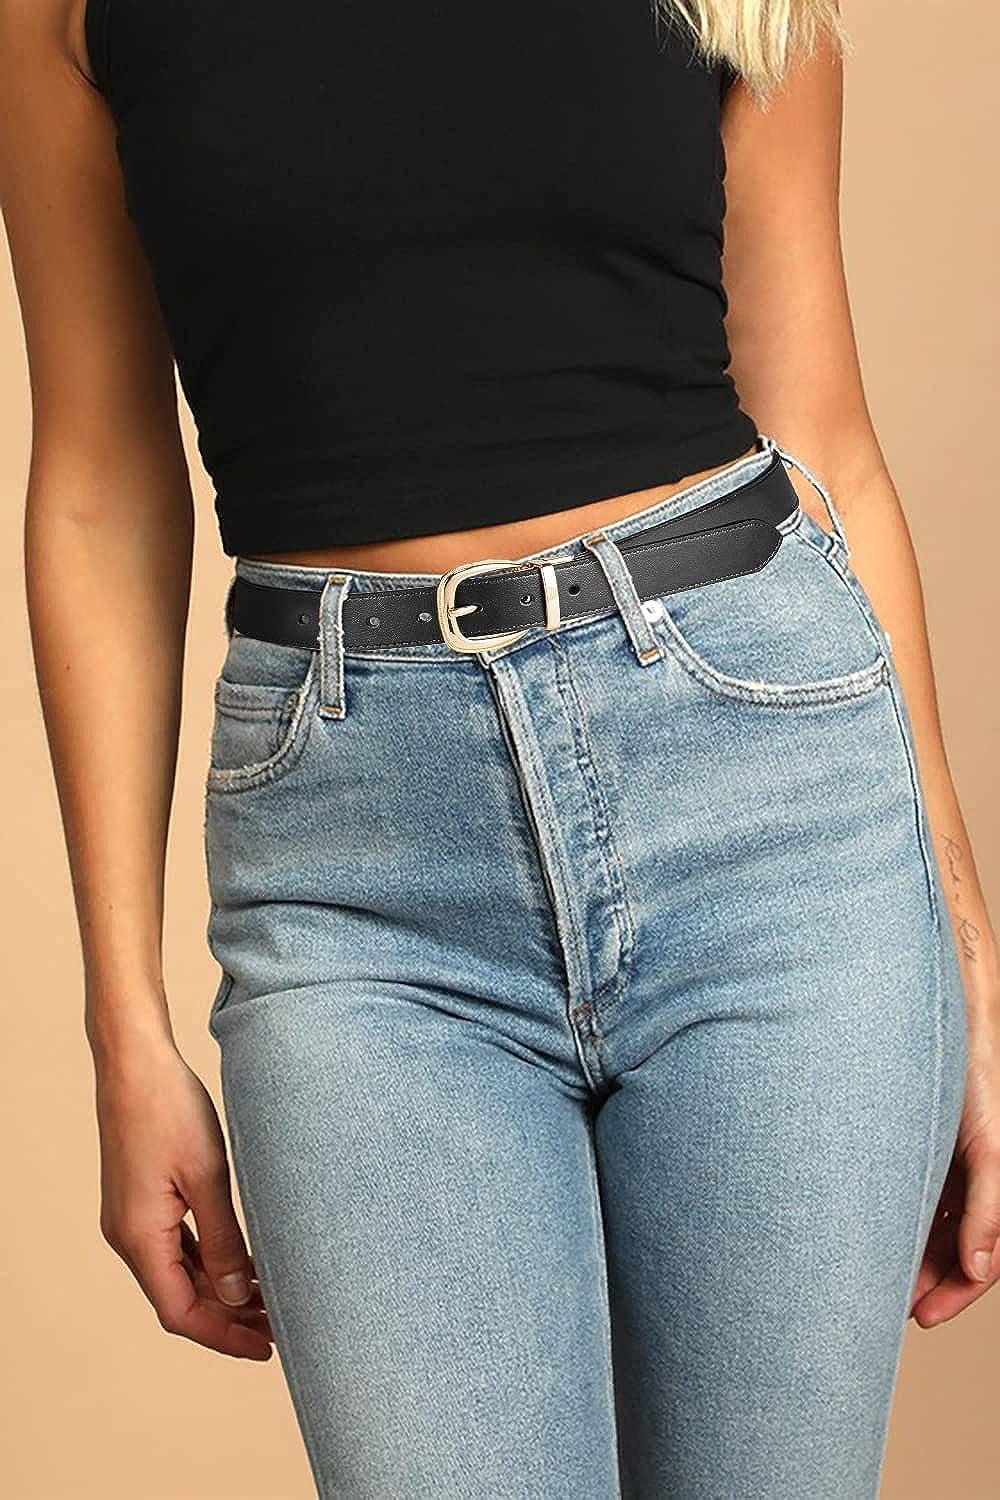 Ladies Belts For Jeans, Belts For Women